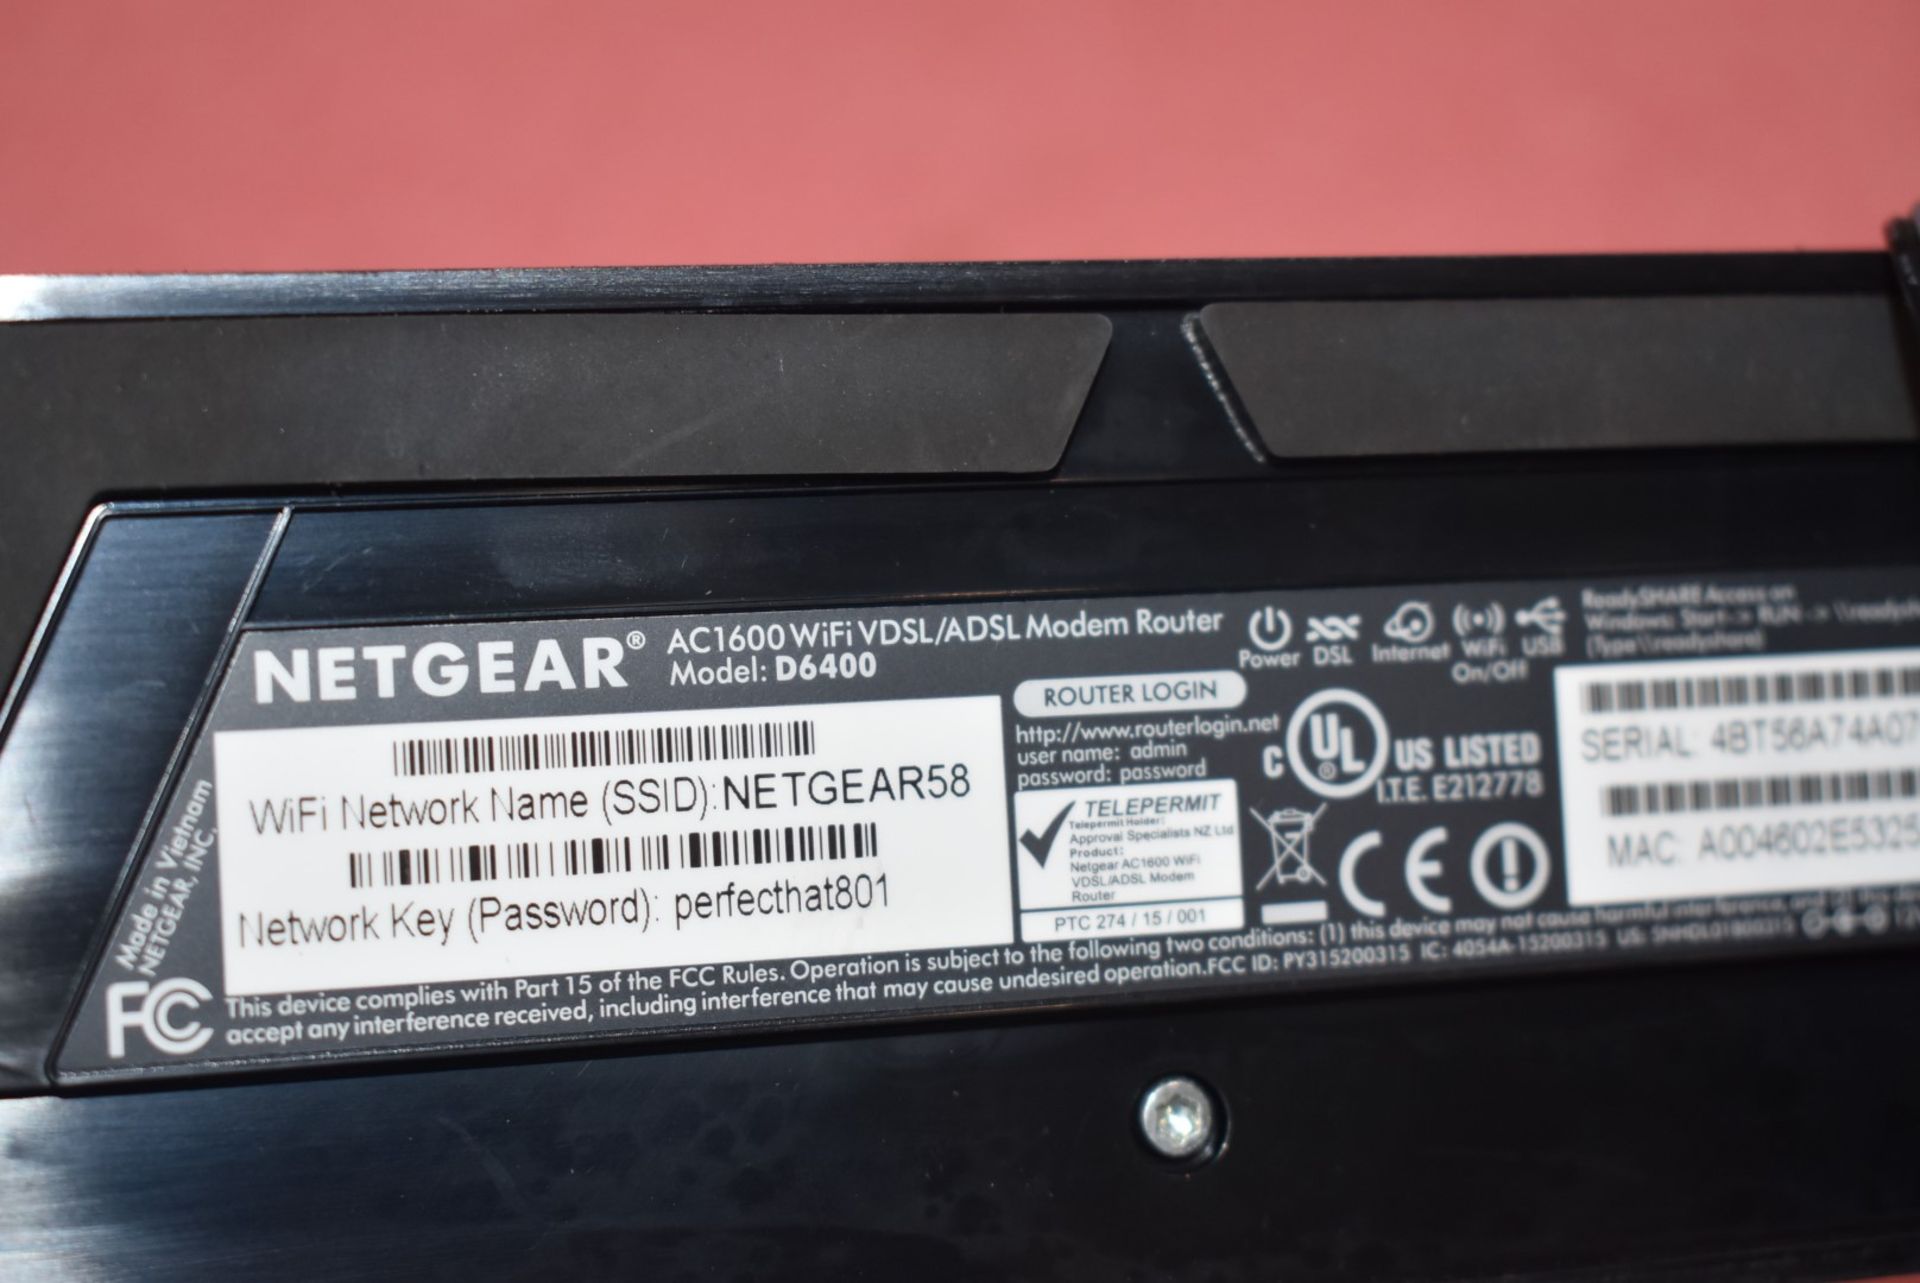 1 x Netgear D6400 AC1600 WiFi VDSL/ADSL Modem Router - Includes Power Adaptor - Image 3 of 3